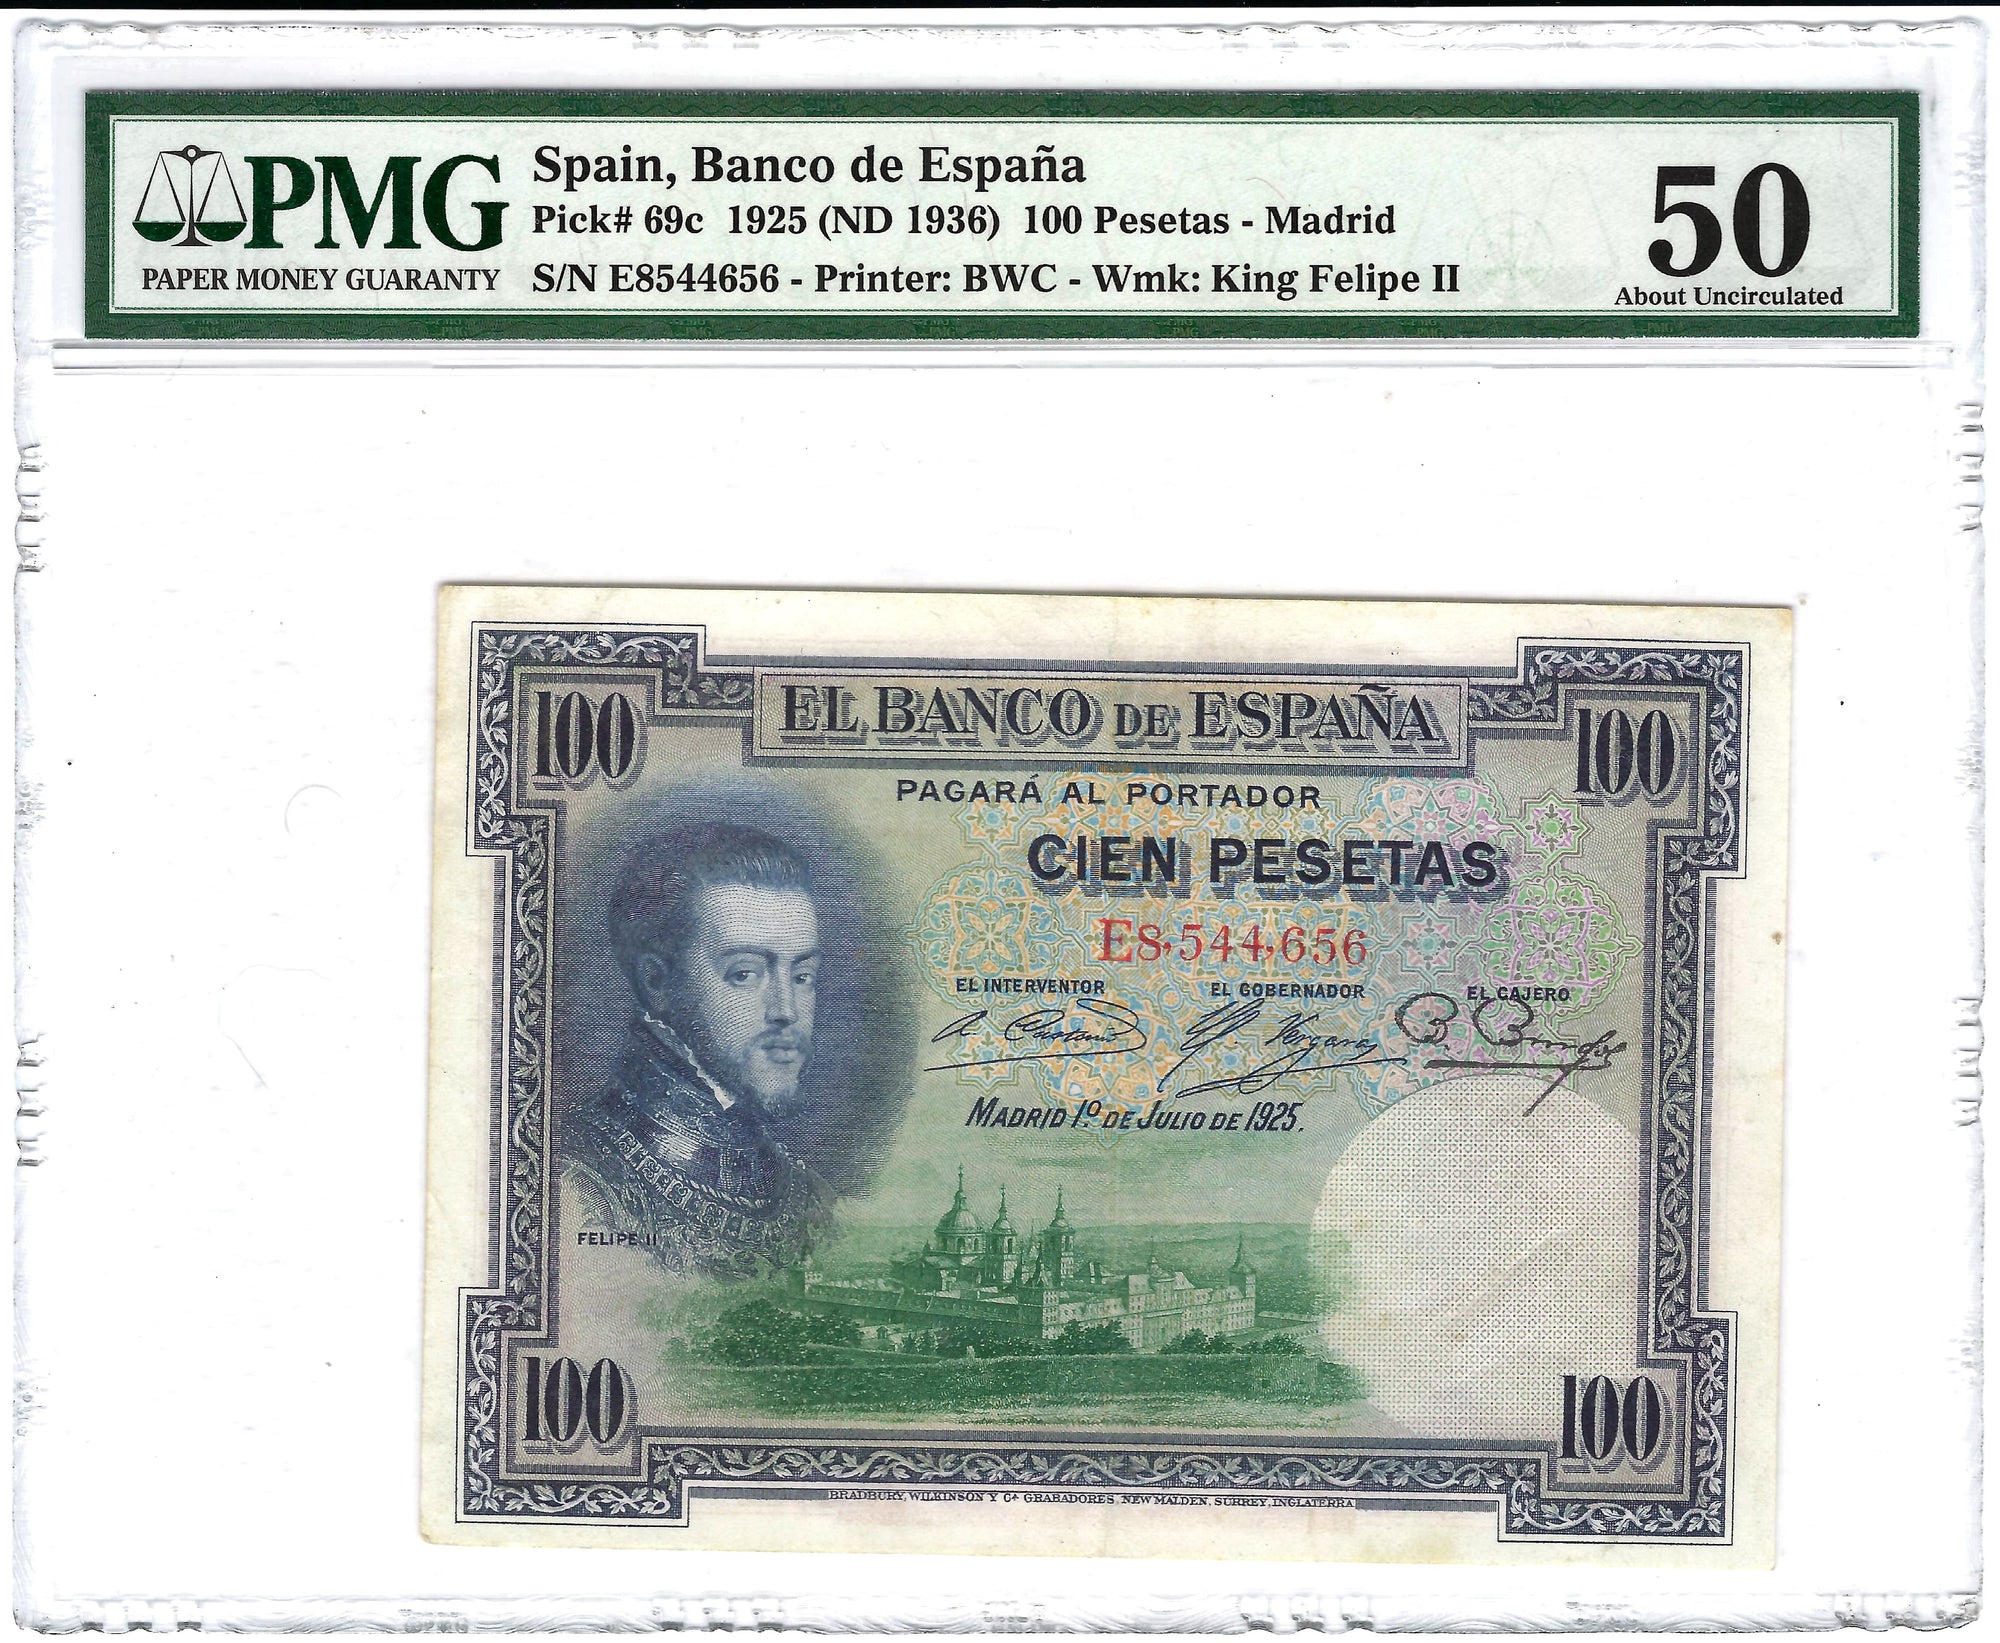 1925 100 Pesetas, Banco de Espana, Spain PMG 50 About uncirculated